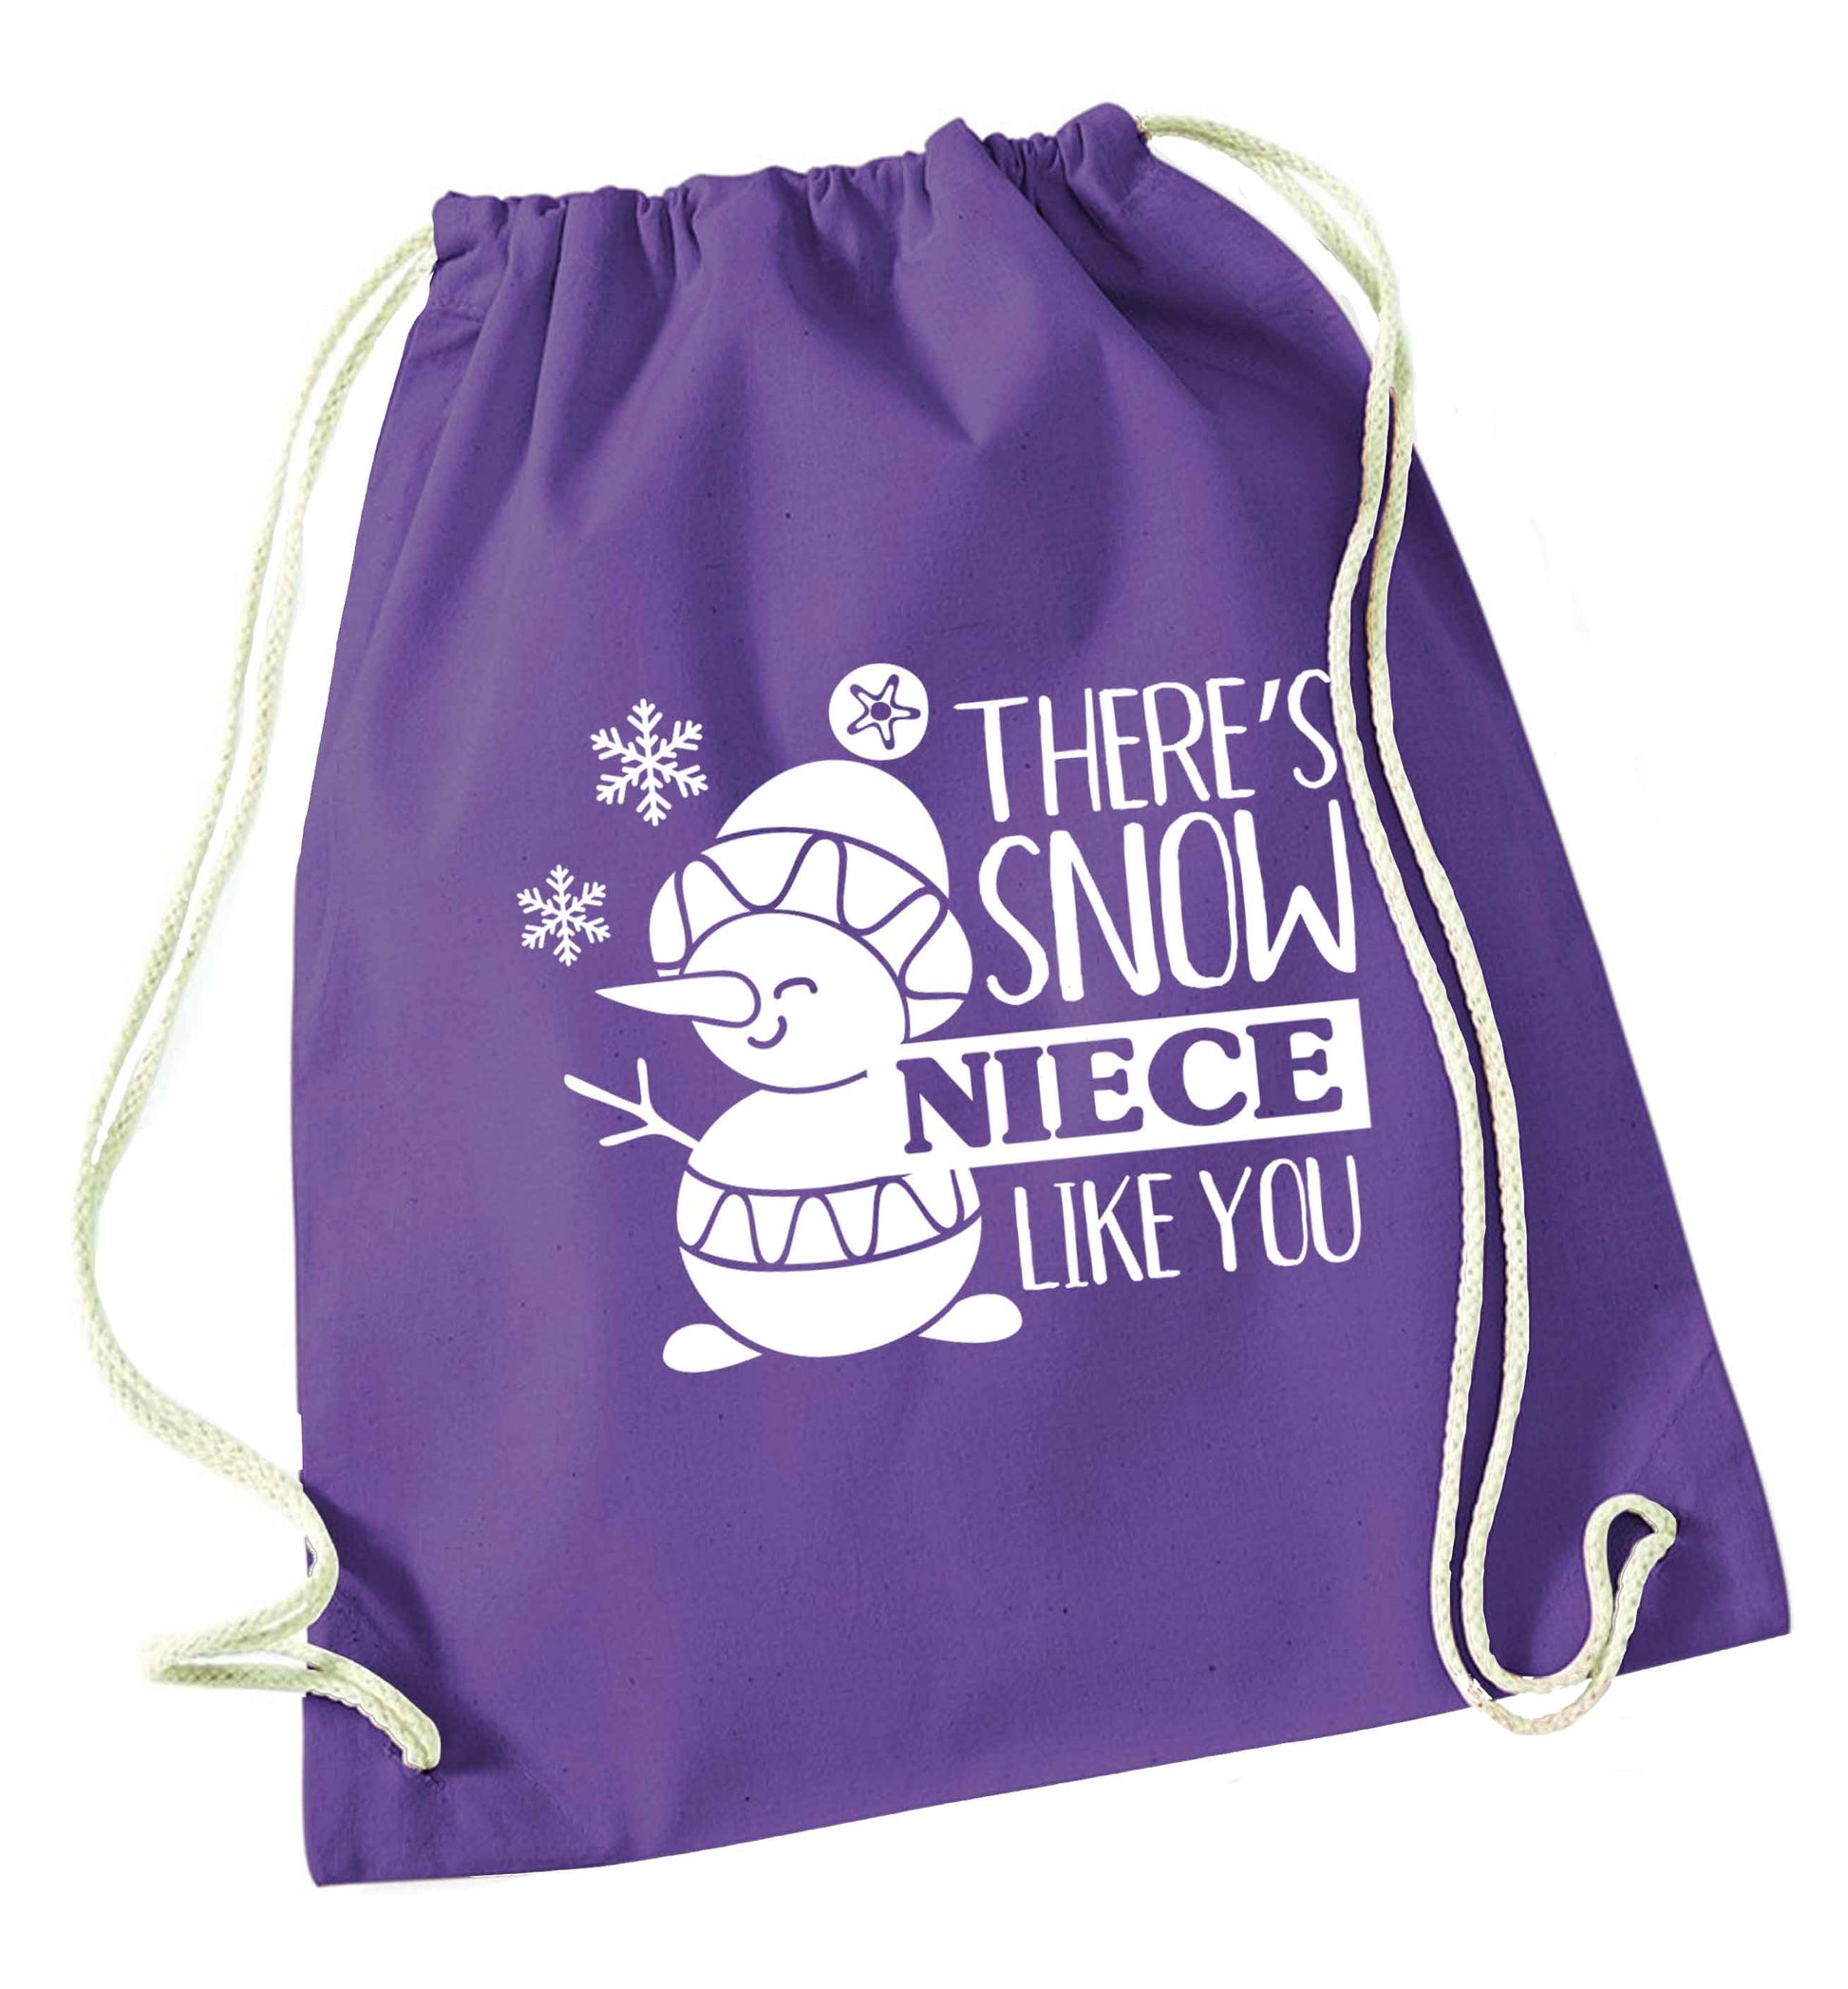 There's snow niece like you purple drawstring bag